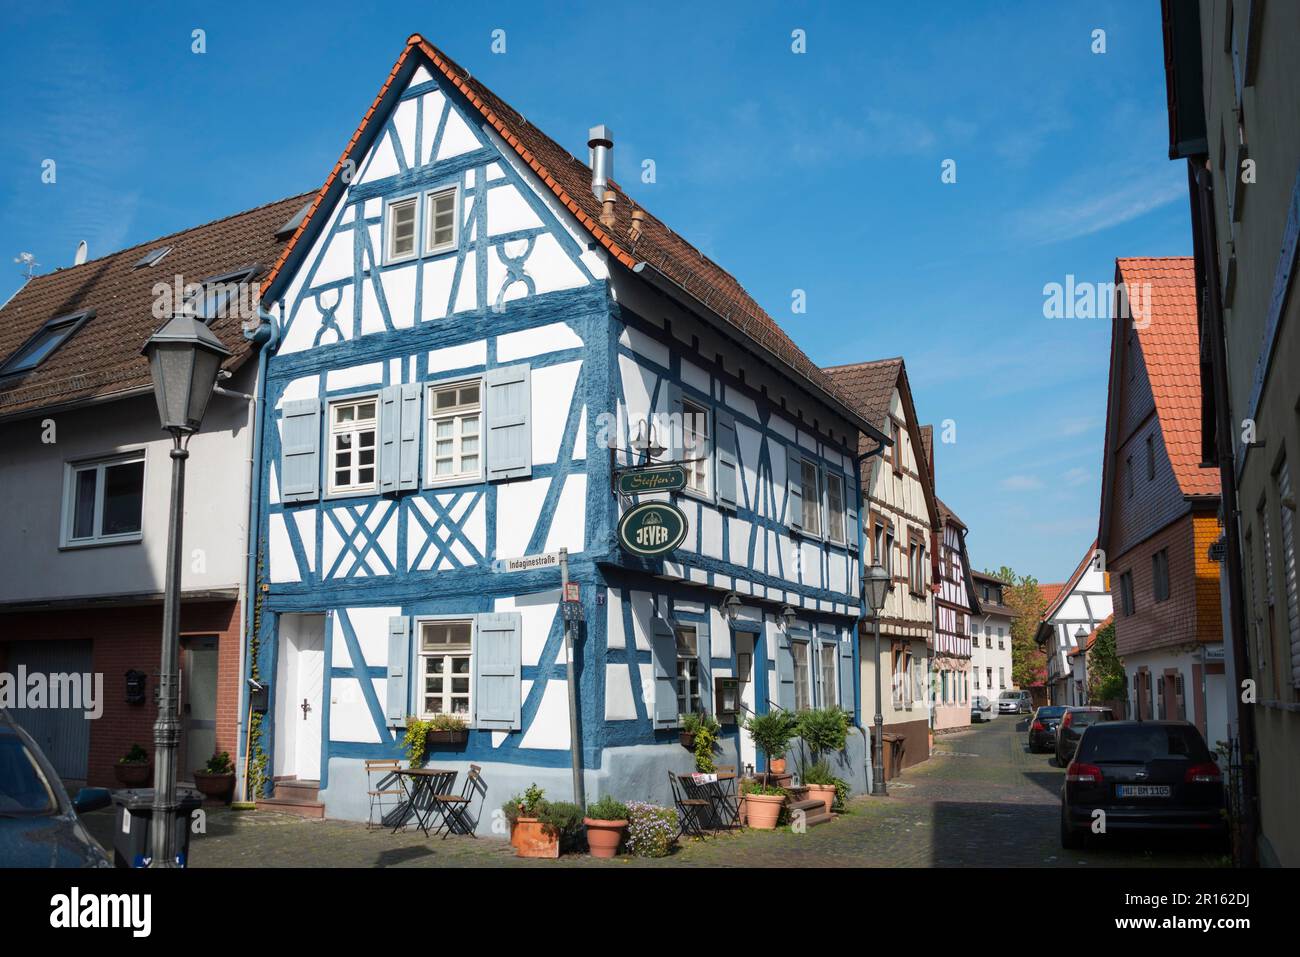 Old town, half-timbered house, Steinheim am Main, Hanau, Hesse, Germany Stock Photo